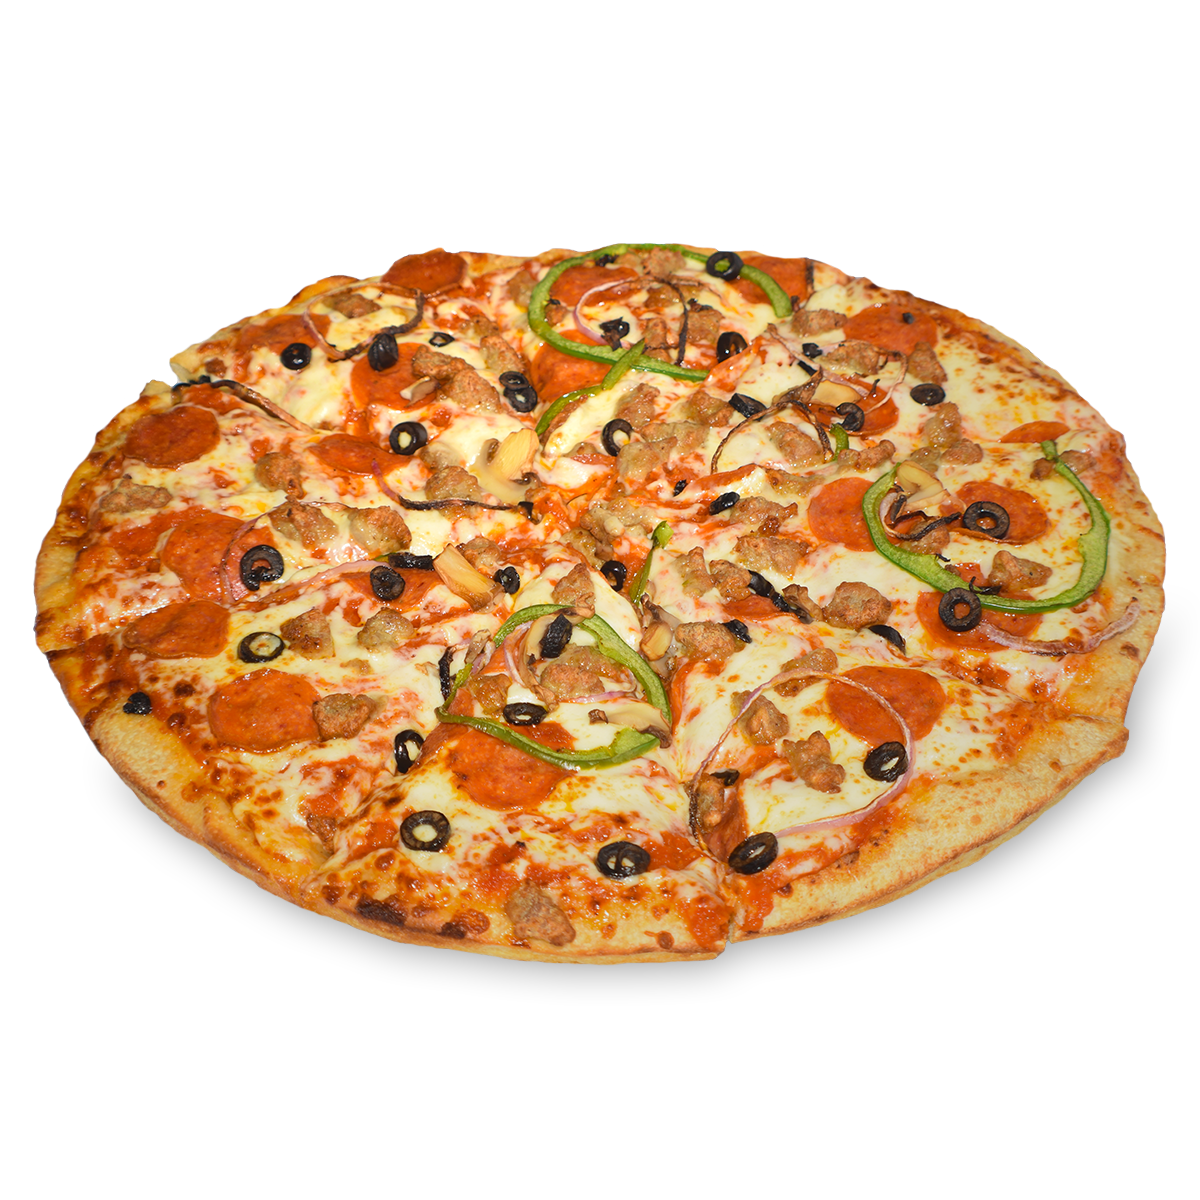 Cliff's Deluxe Pizza